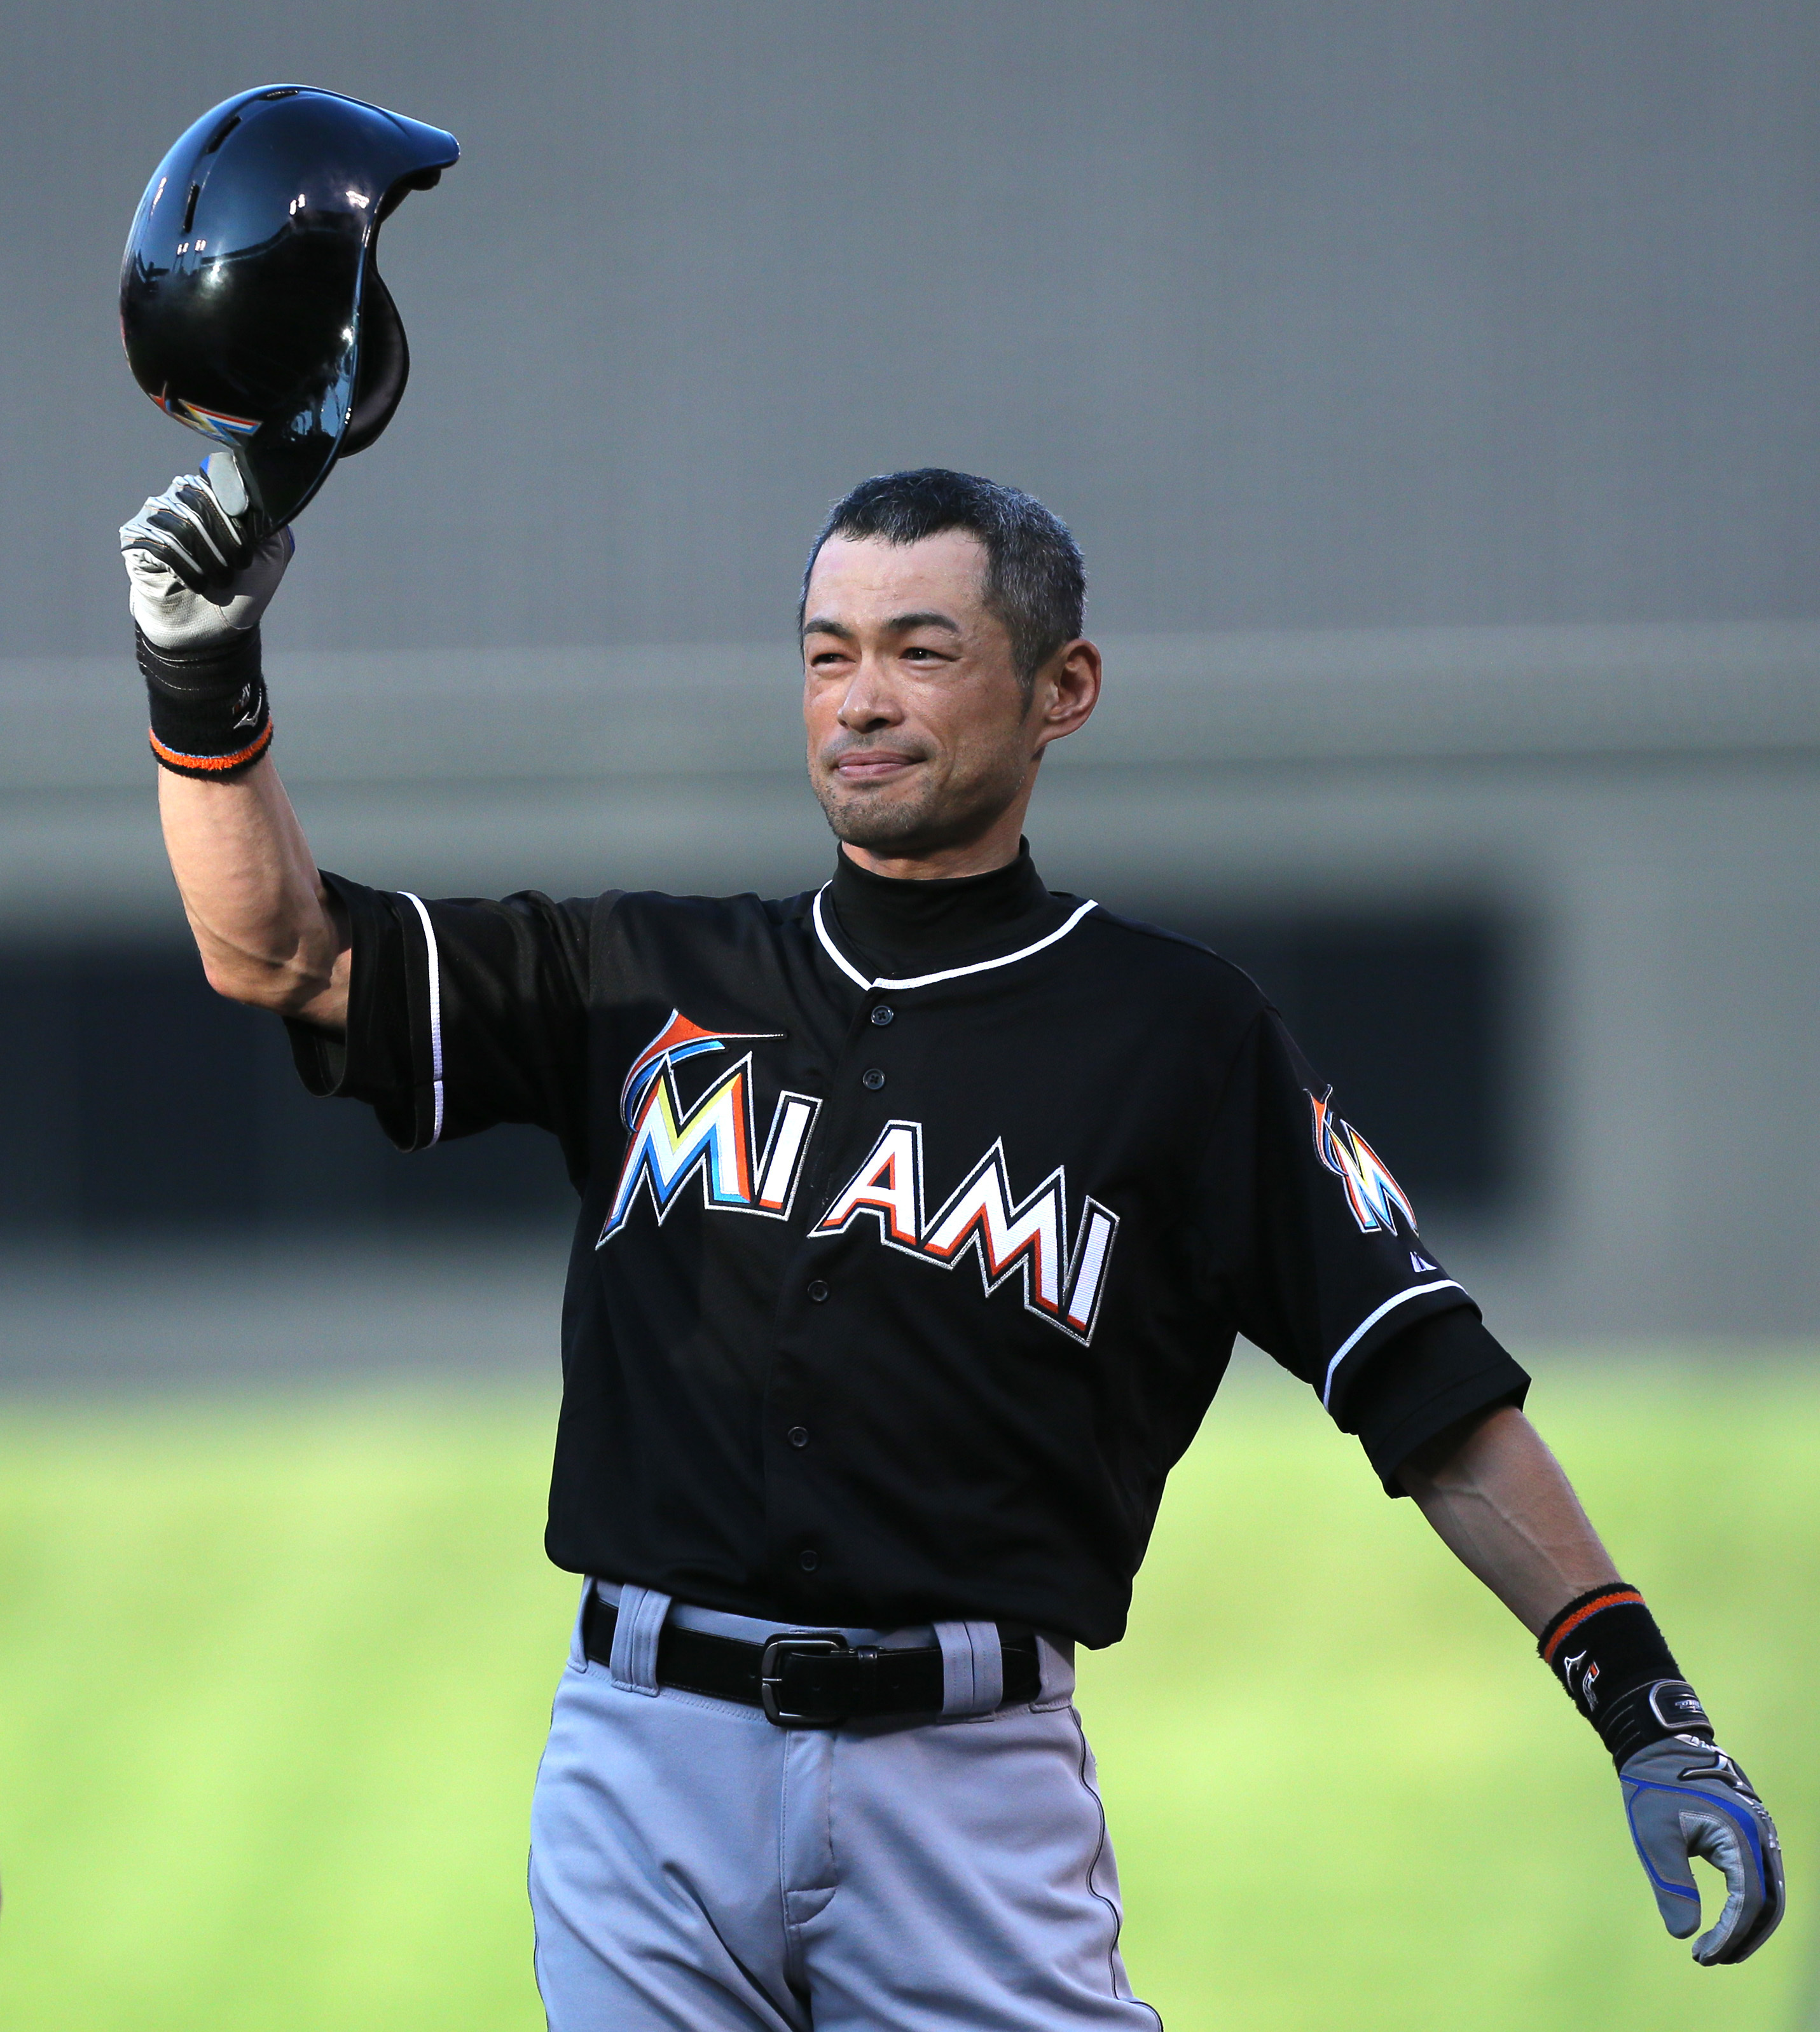 Piniella reflects on Ichiro's career - The Japan Times